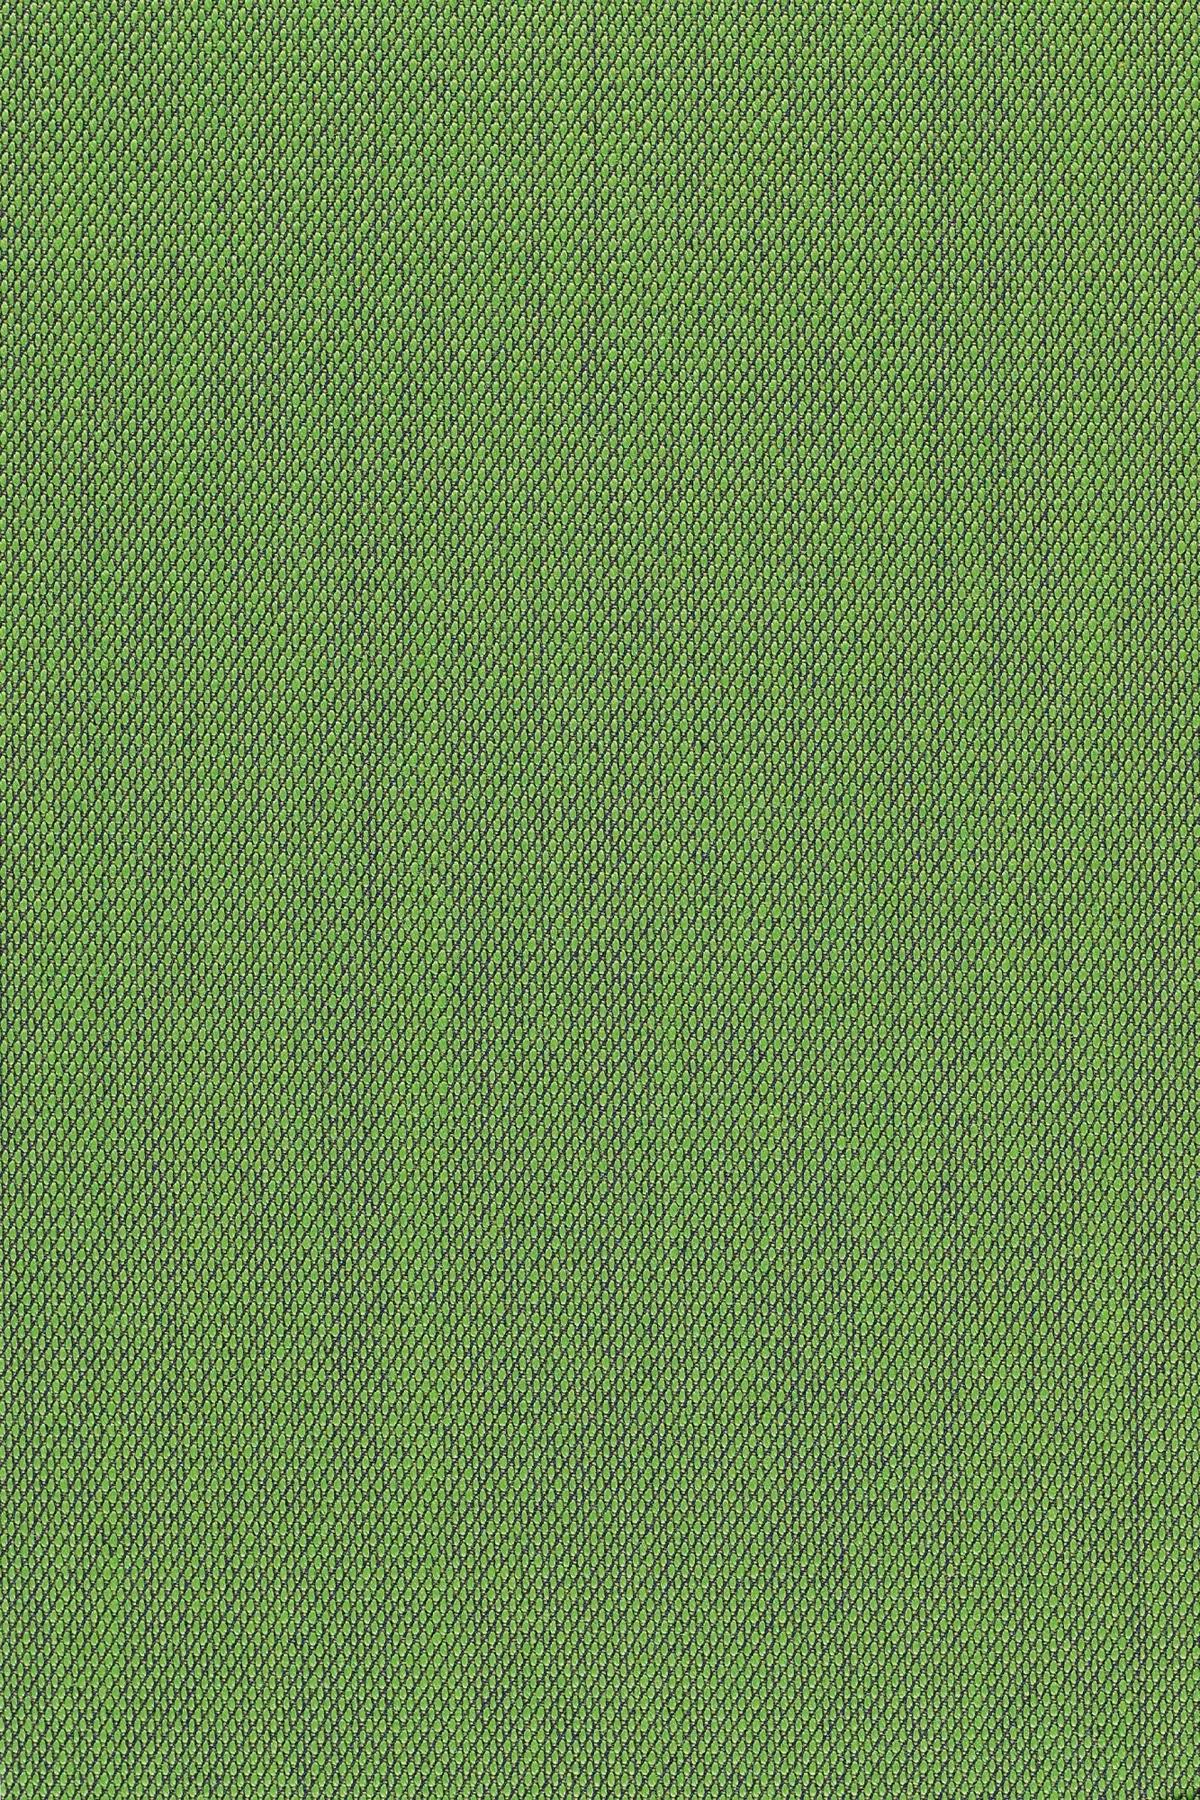 Fabric sample Steelcut Trio 3 953 green